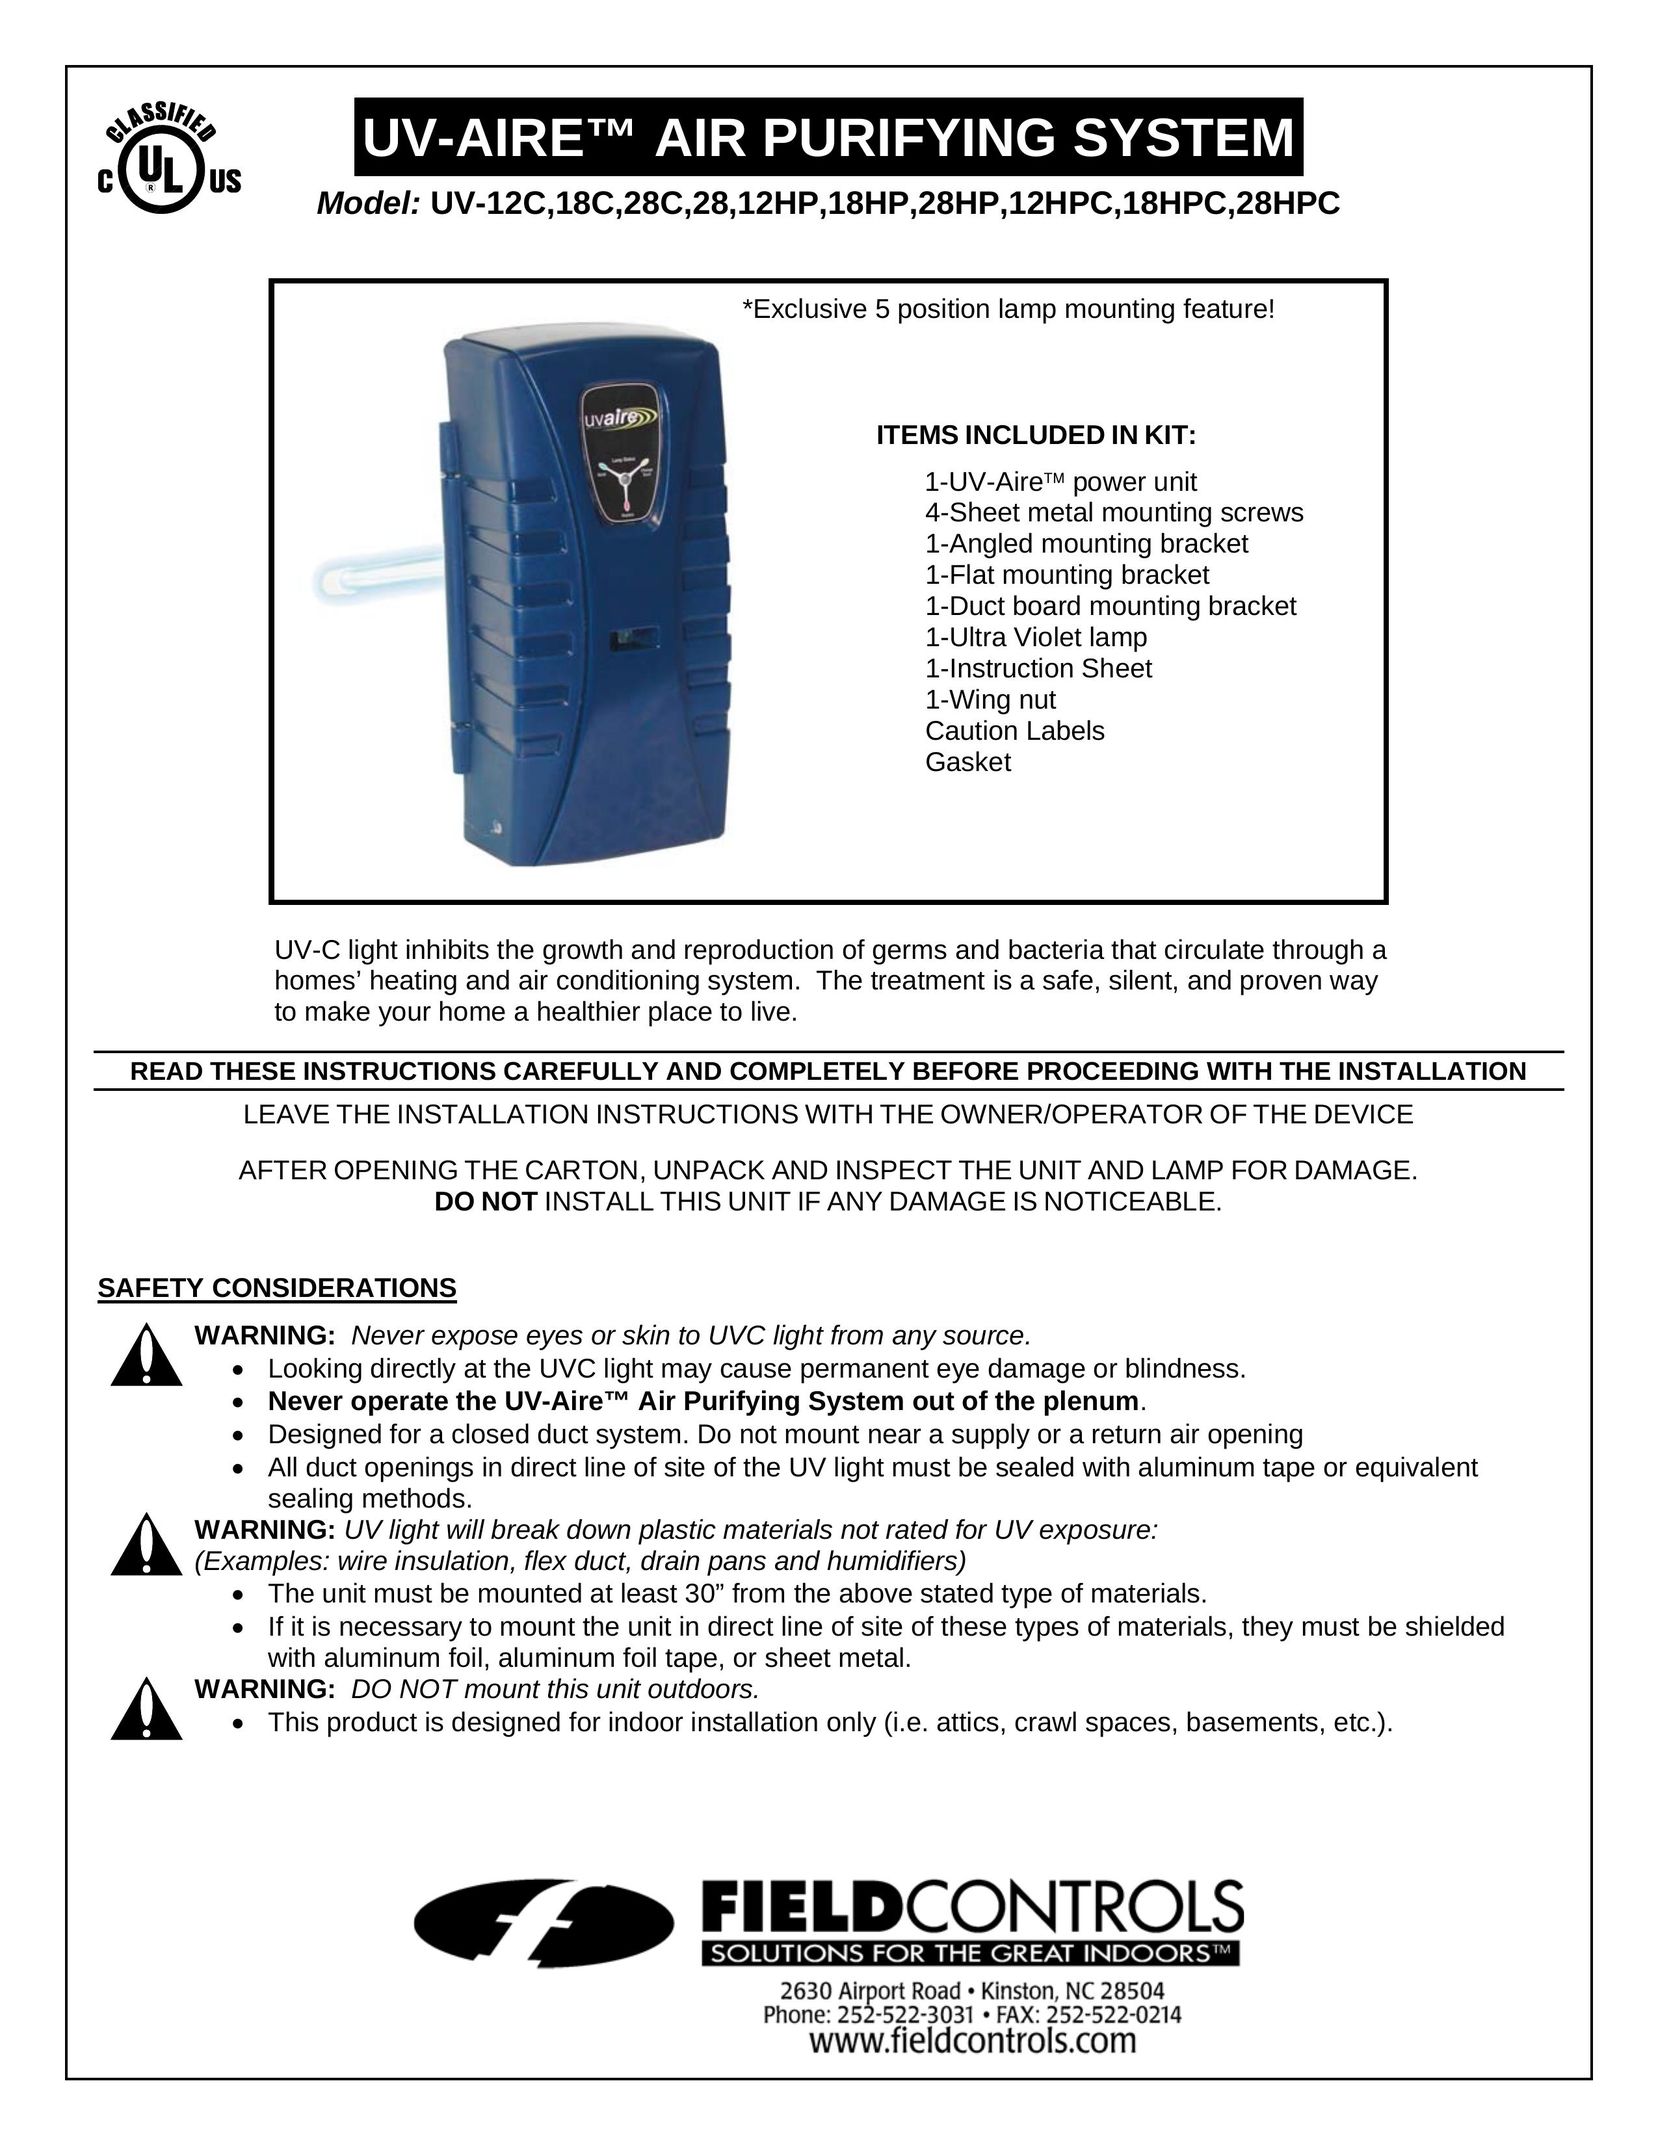 Field Controls UV-28HPC Air Cleaner User Manual